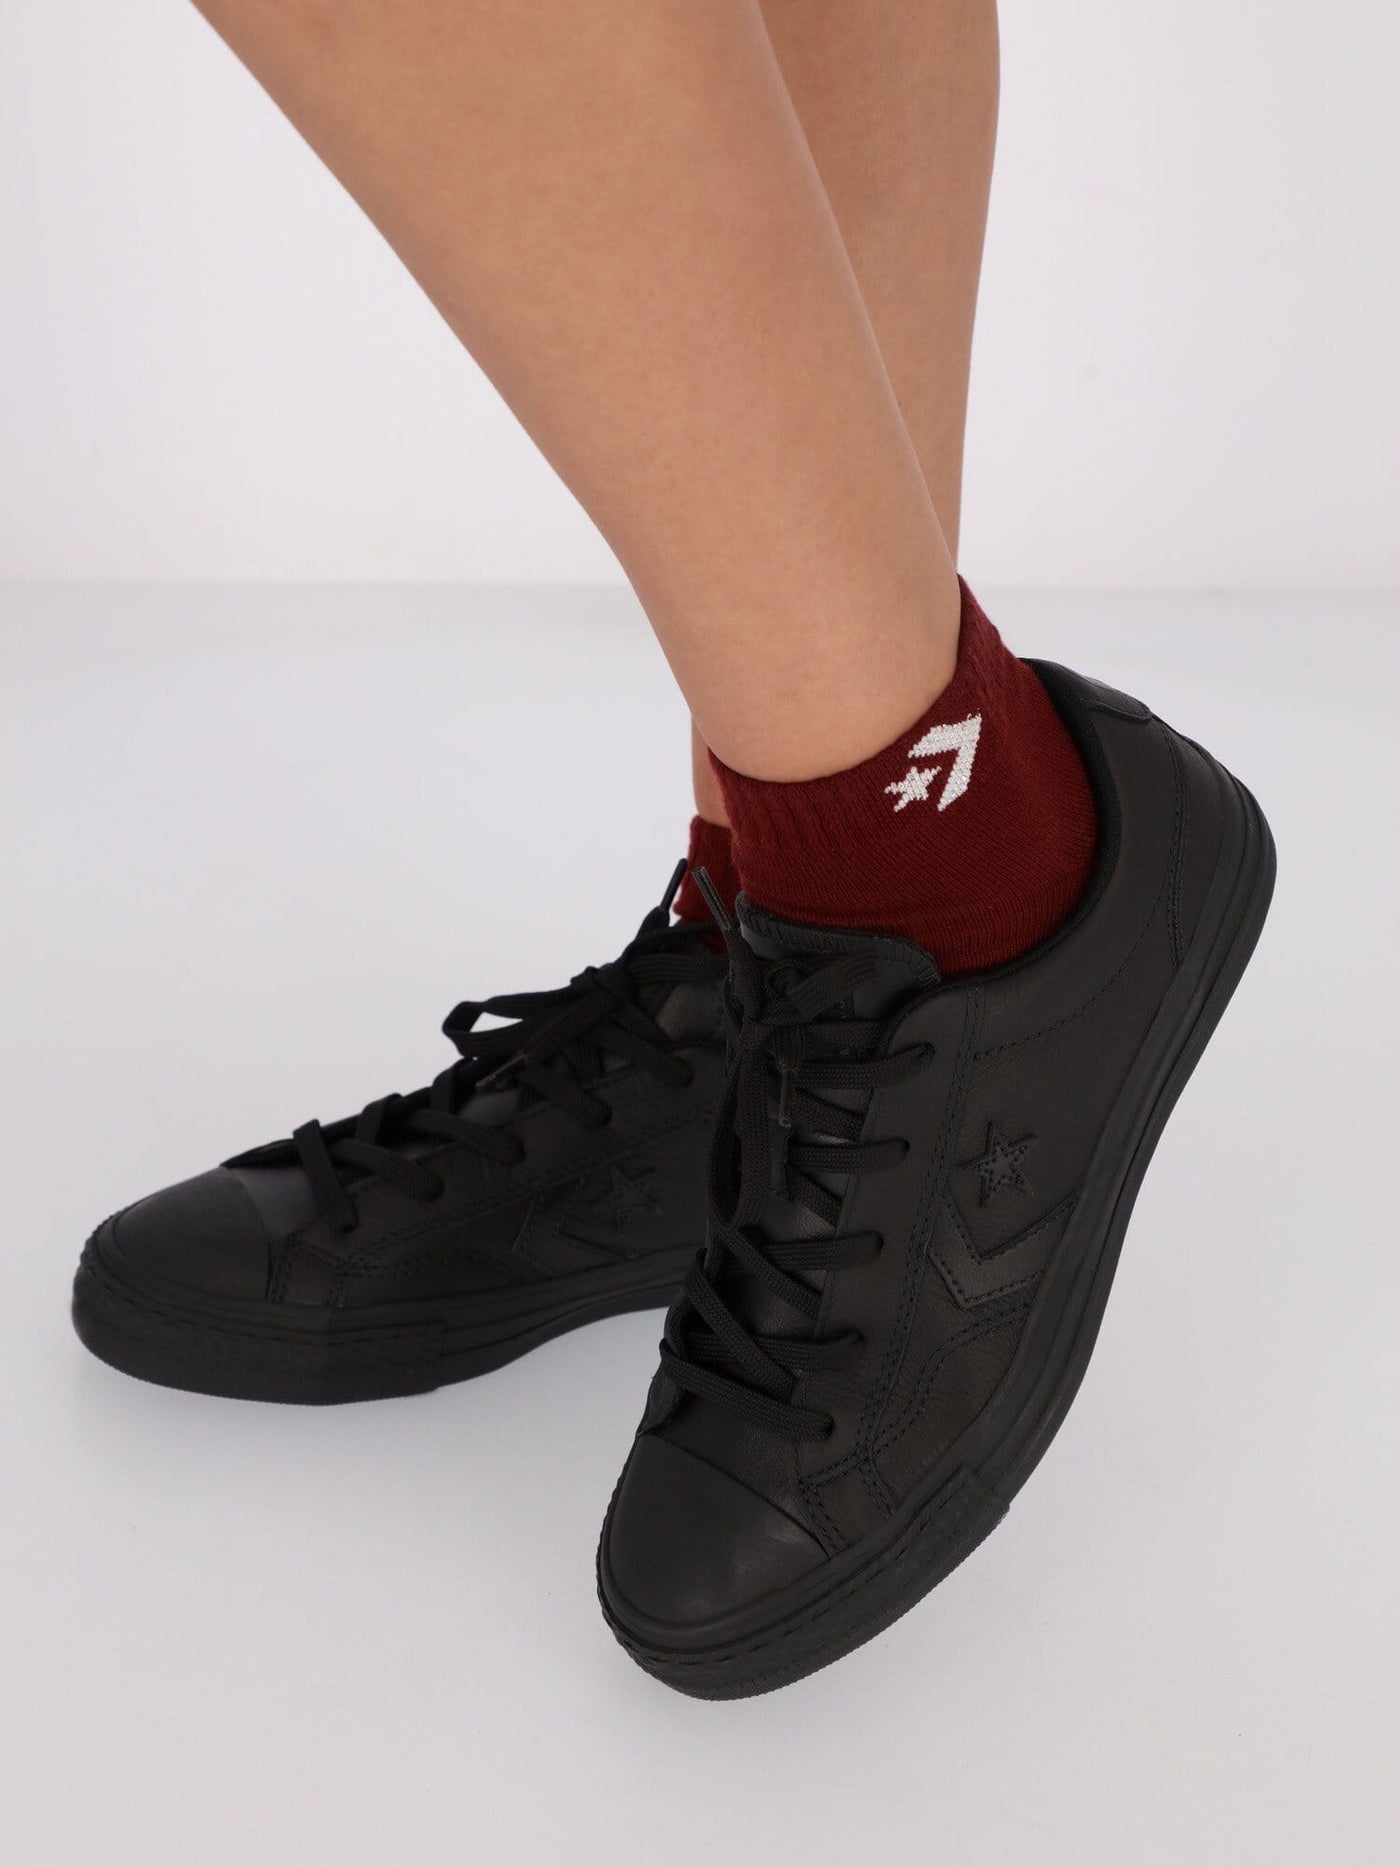 Branded Chuck 70 High Black Sneakers » Shopesy – Shopesy